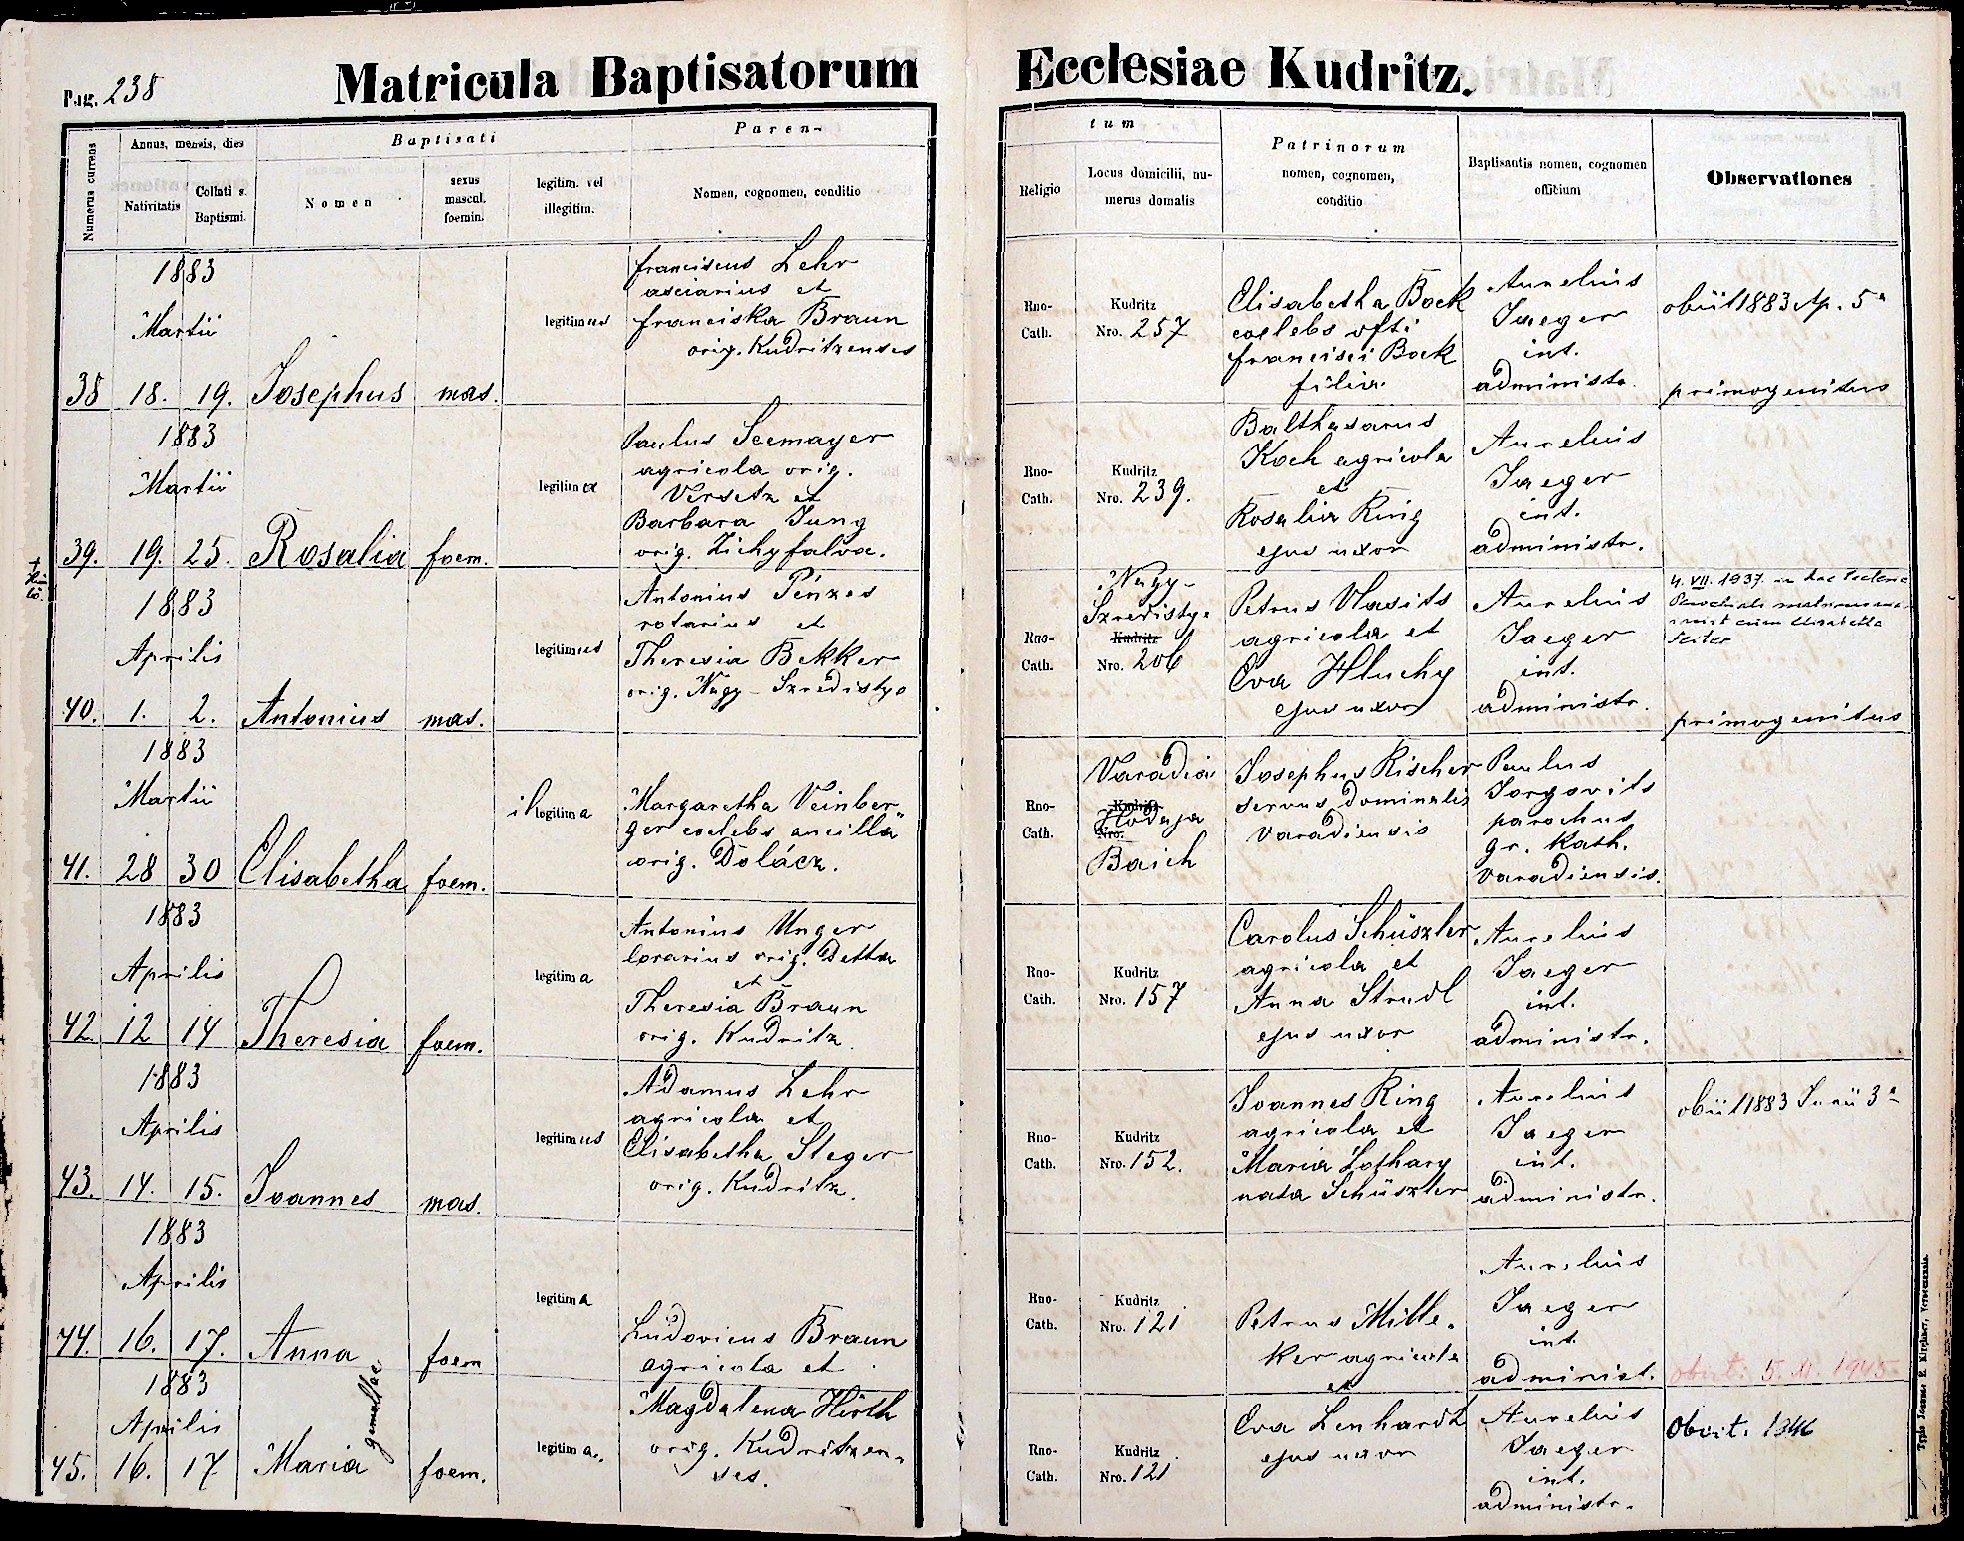 images/church_records/BIRTHS/1880-1883B/1883/238